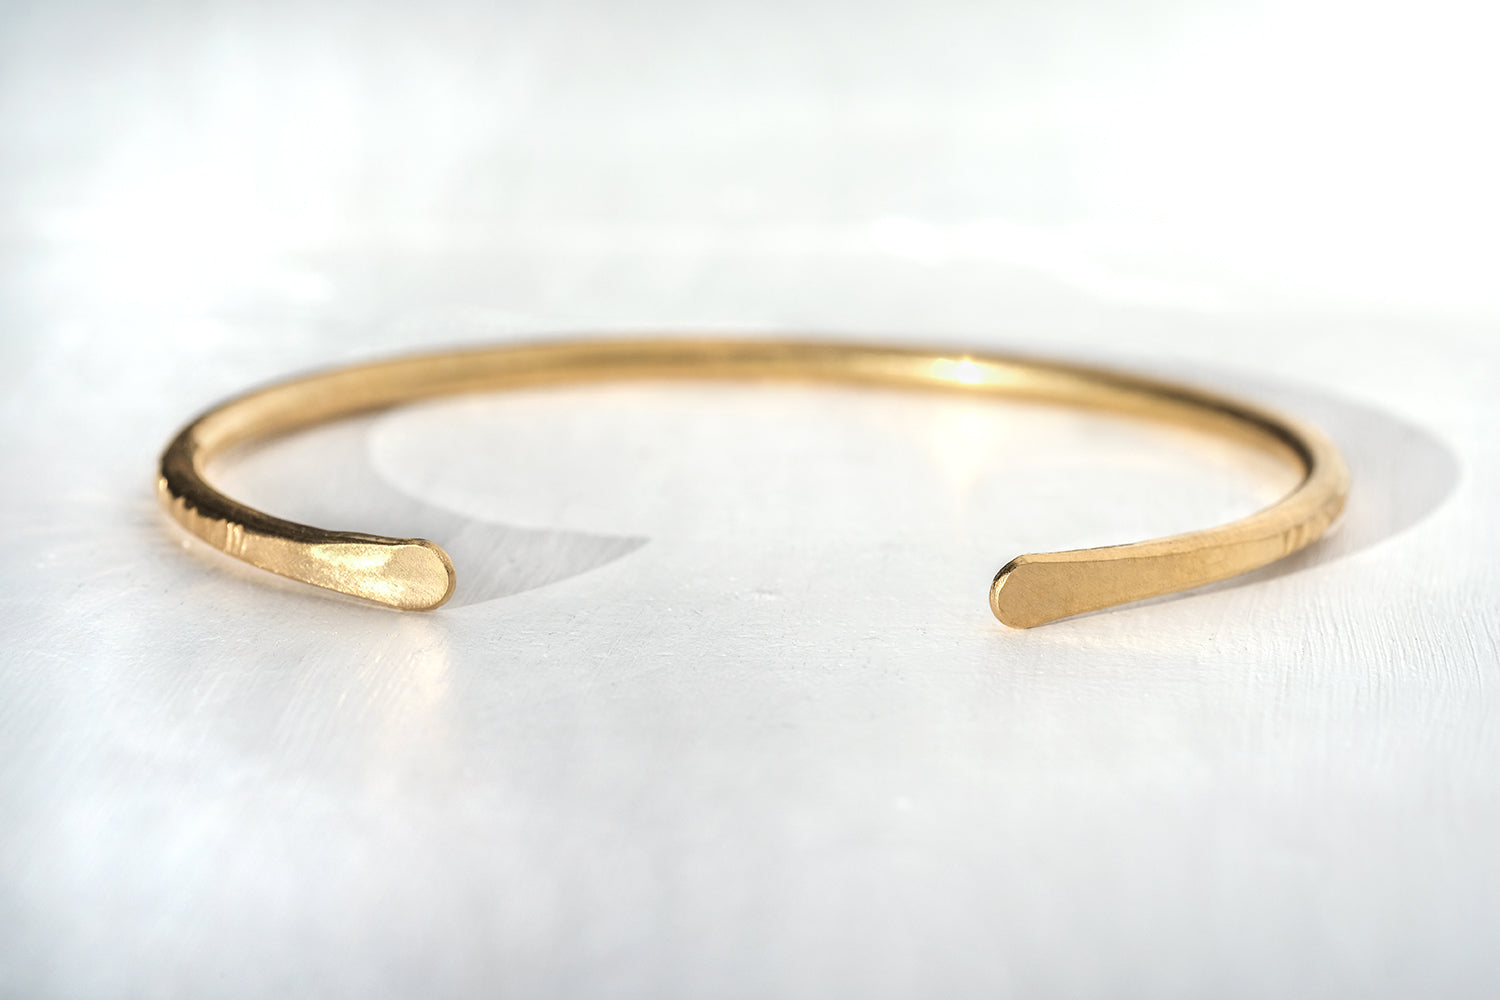 Thin Gold Bracelet For Men - With Grooves